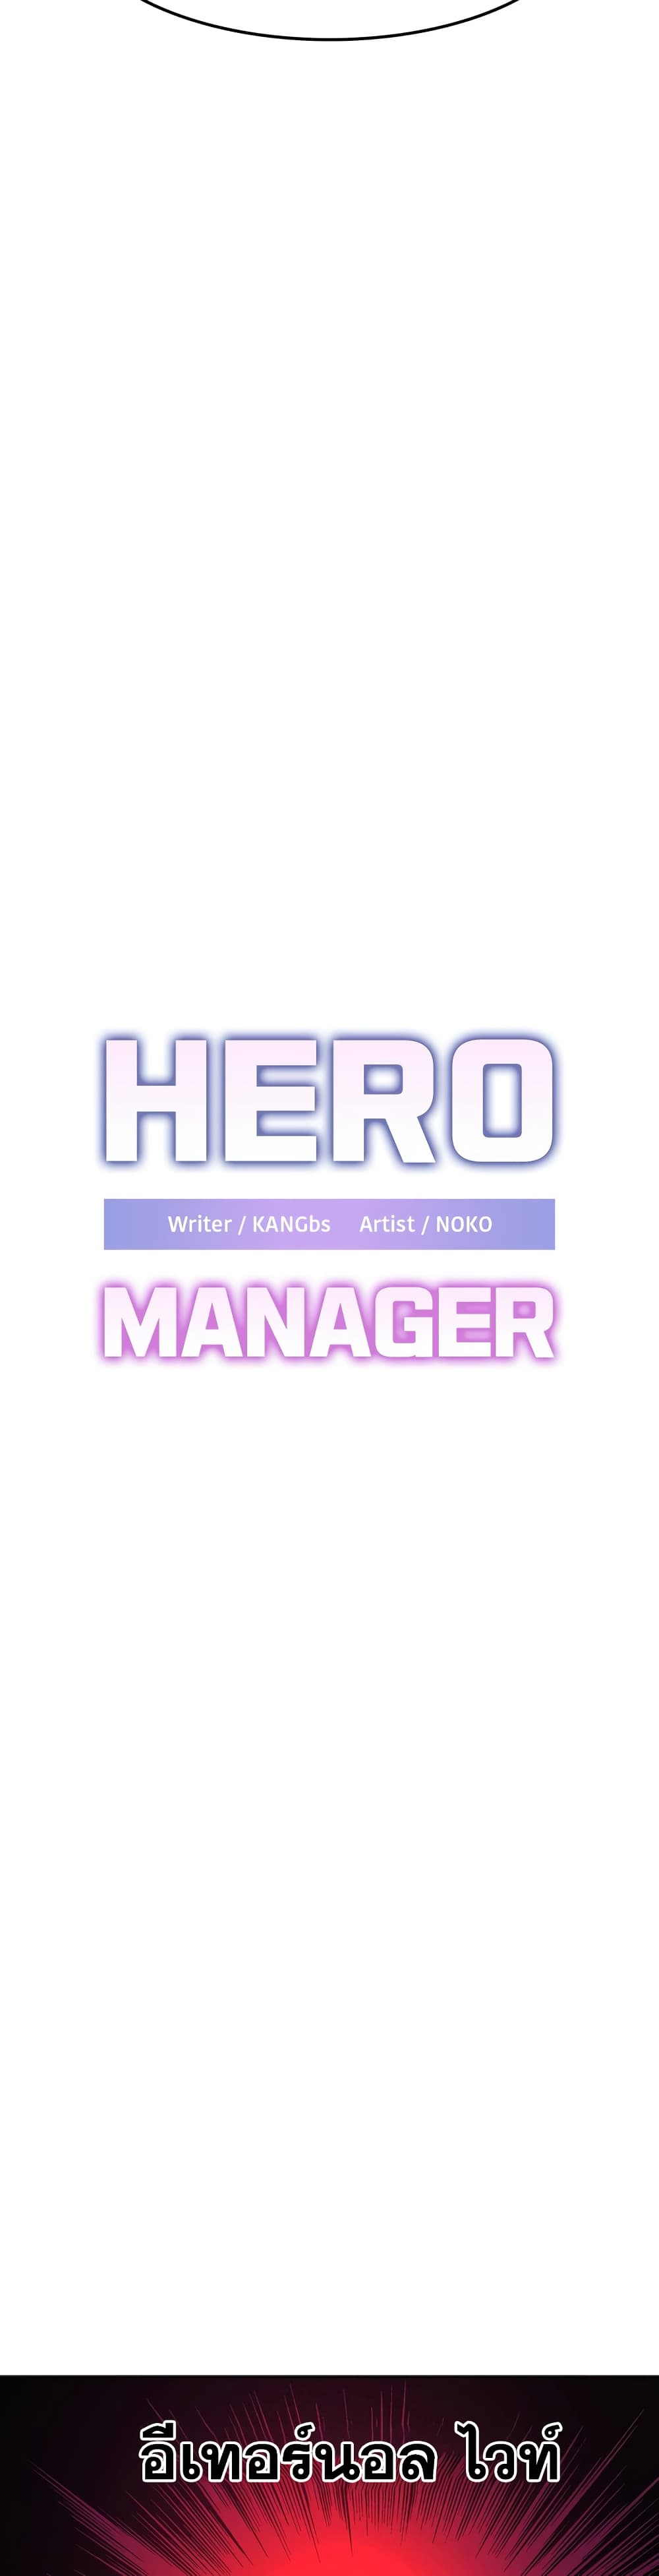 Hero Manager 22-22